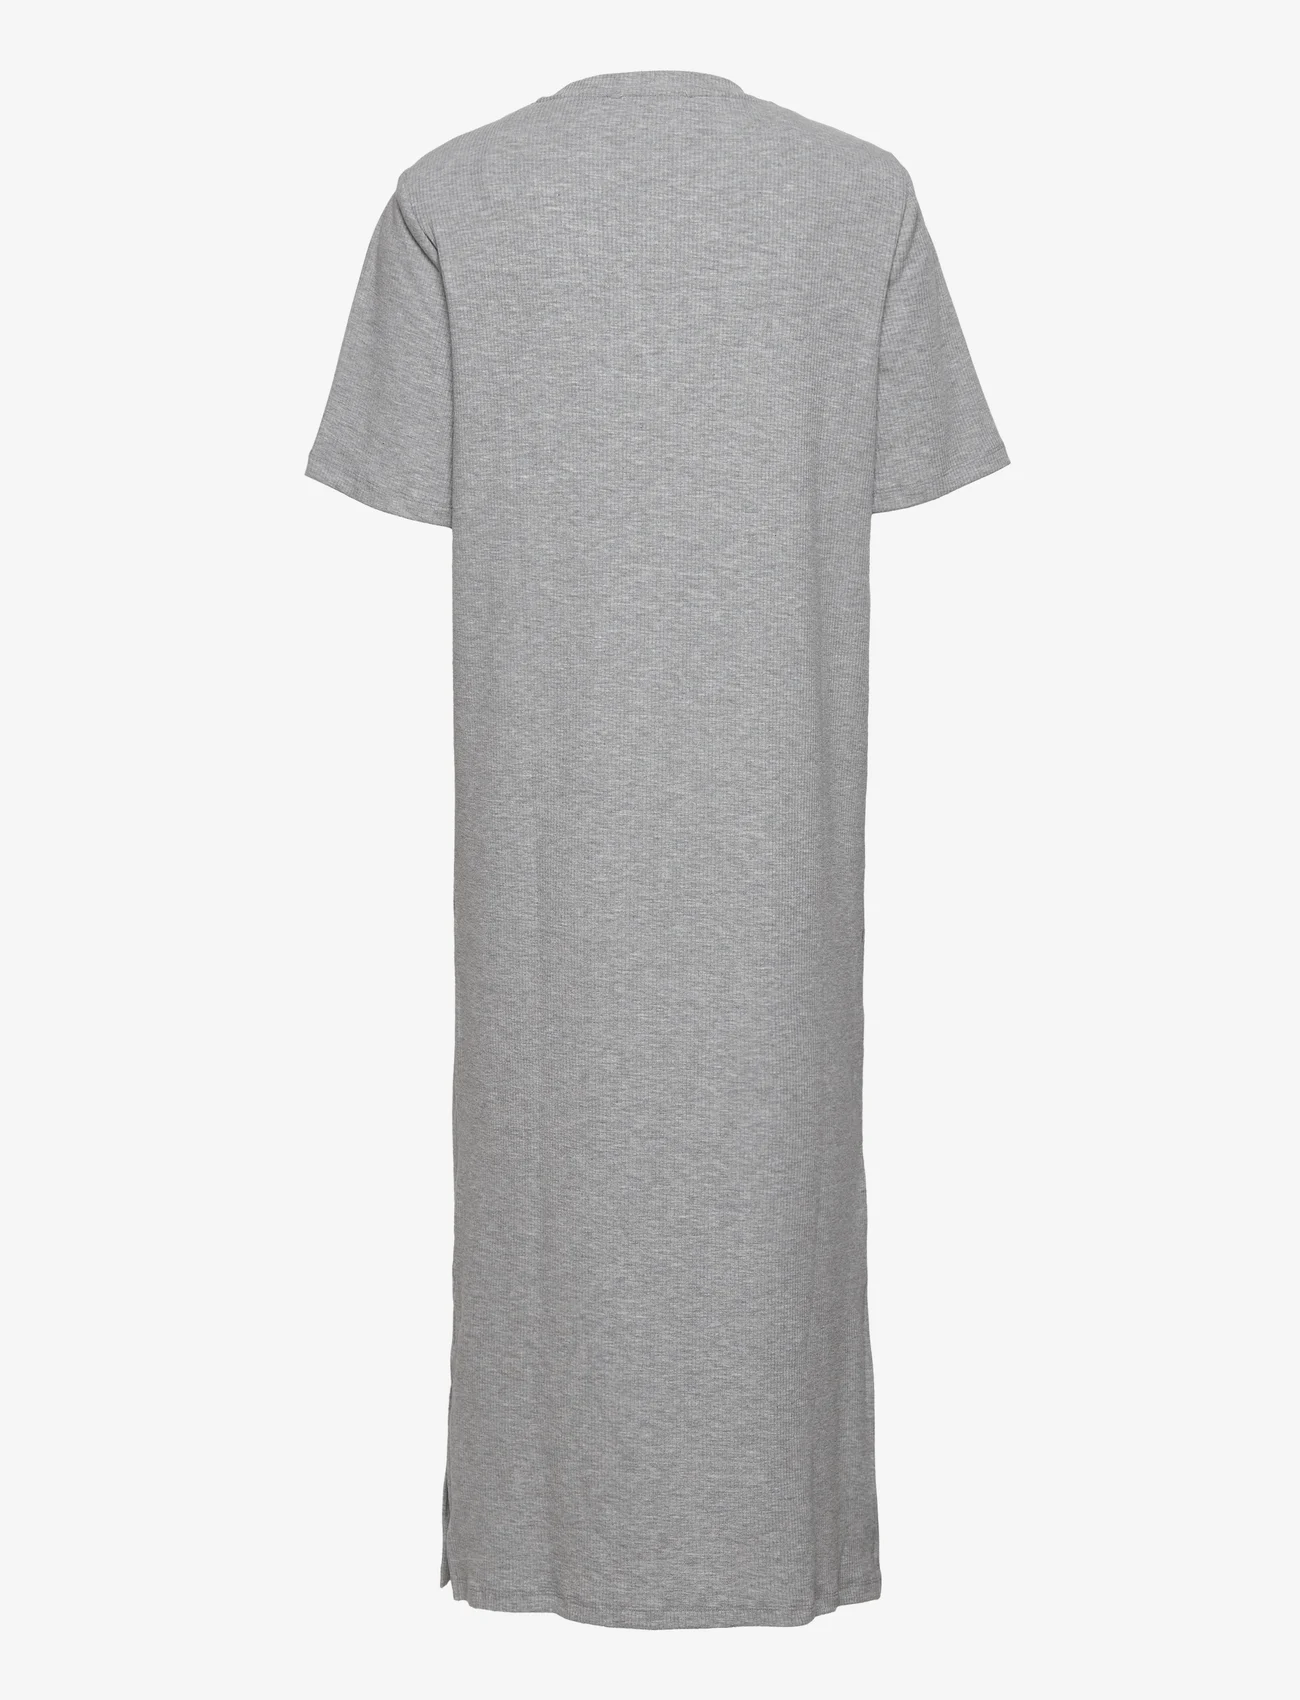 Just Female - Noble midi dress mel - t-shirt dresses - grey melange - 1